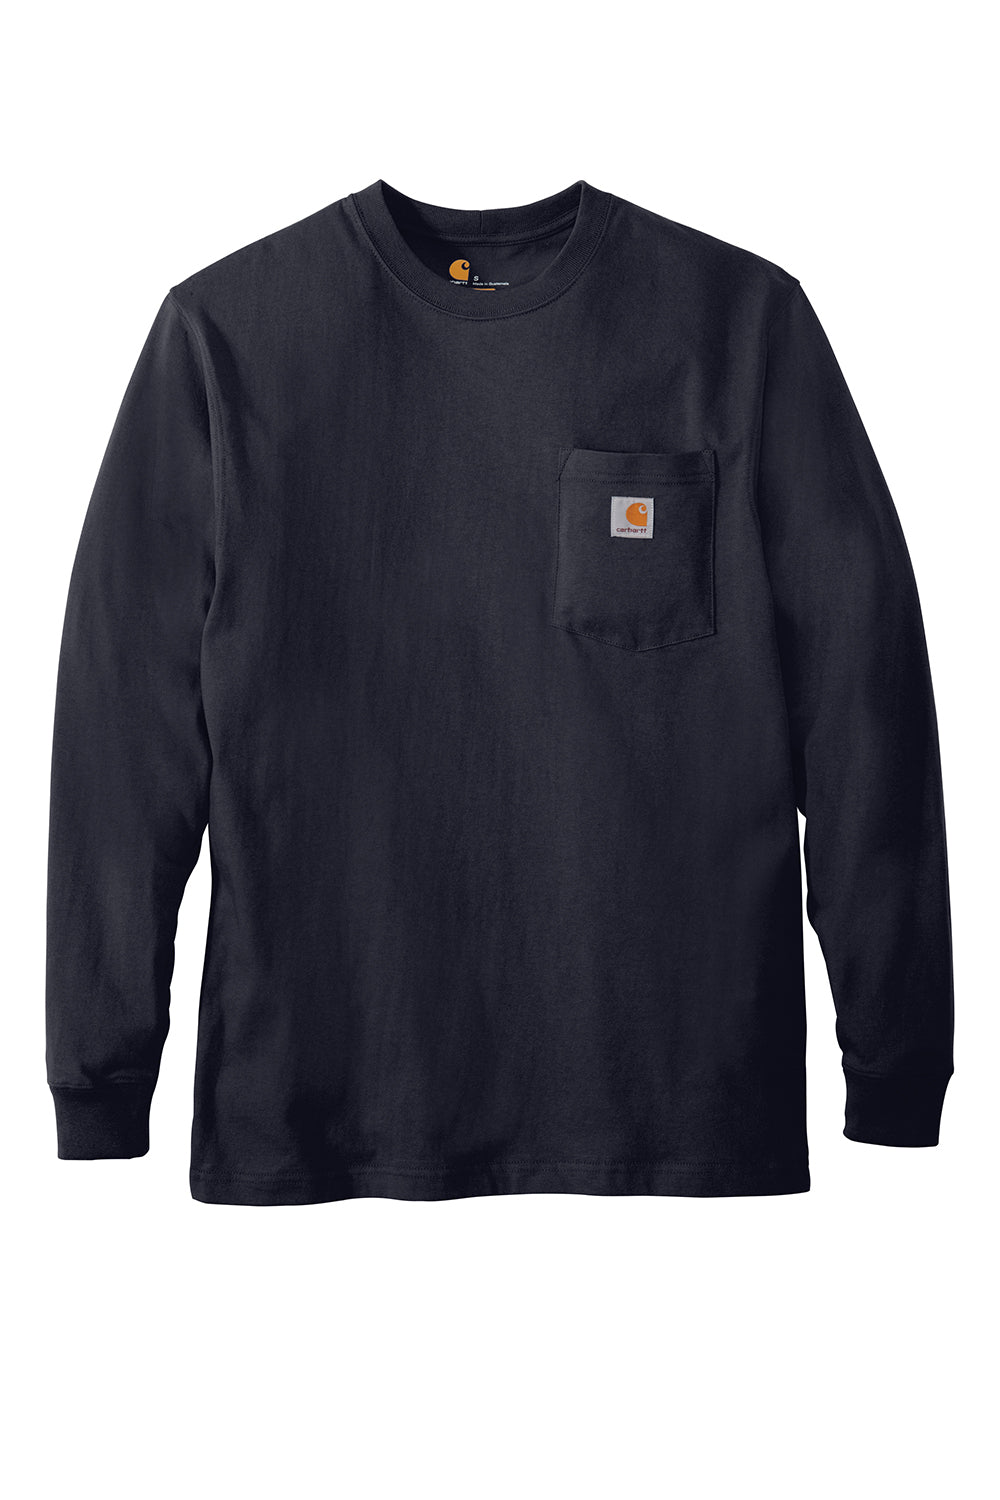 Carhartt CTK126 Mens Workwear Long Sleeve Crewneck T-Shirt w/ Pocket Navy Blue Flat Front